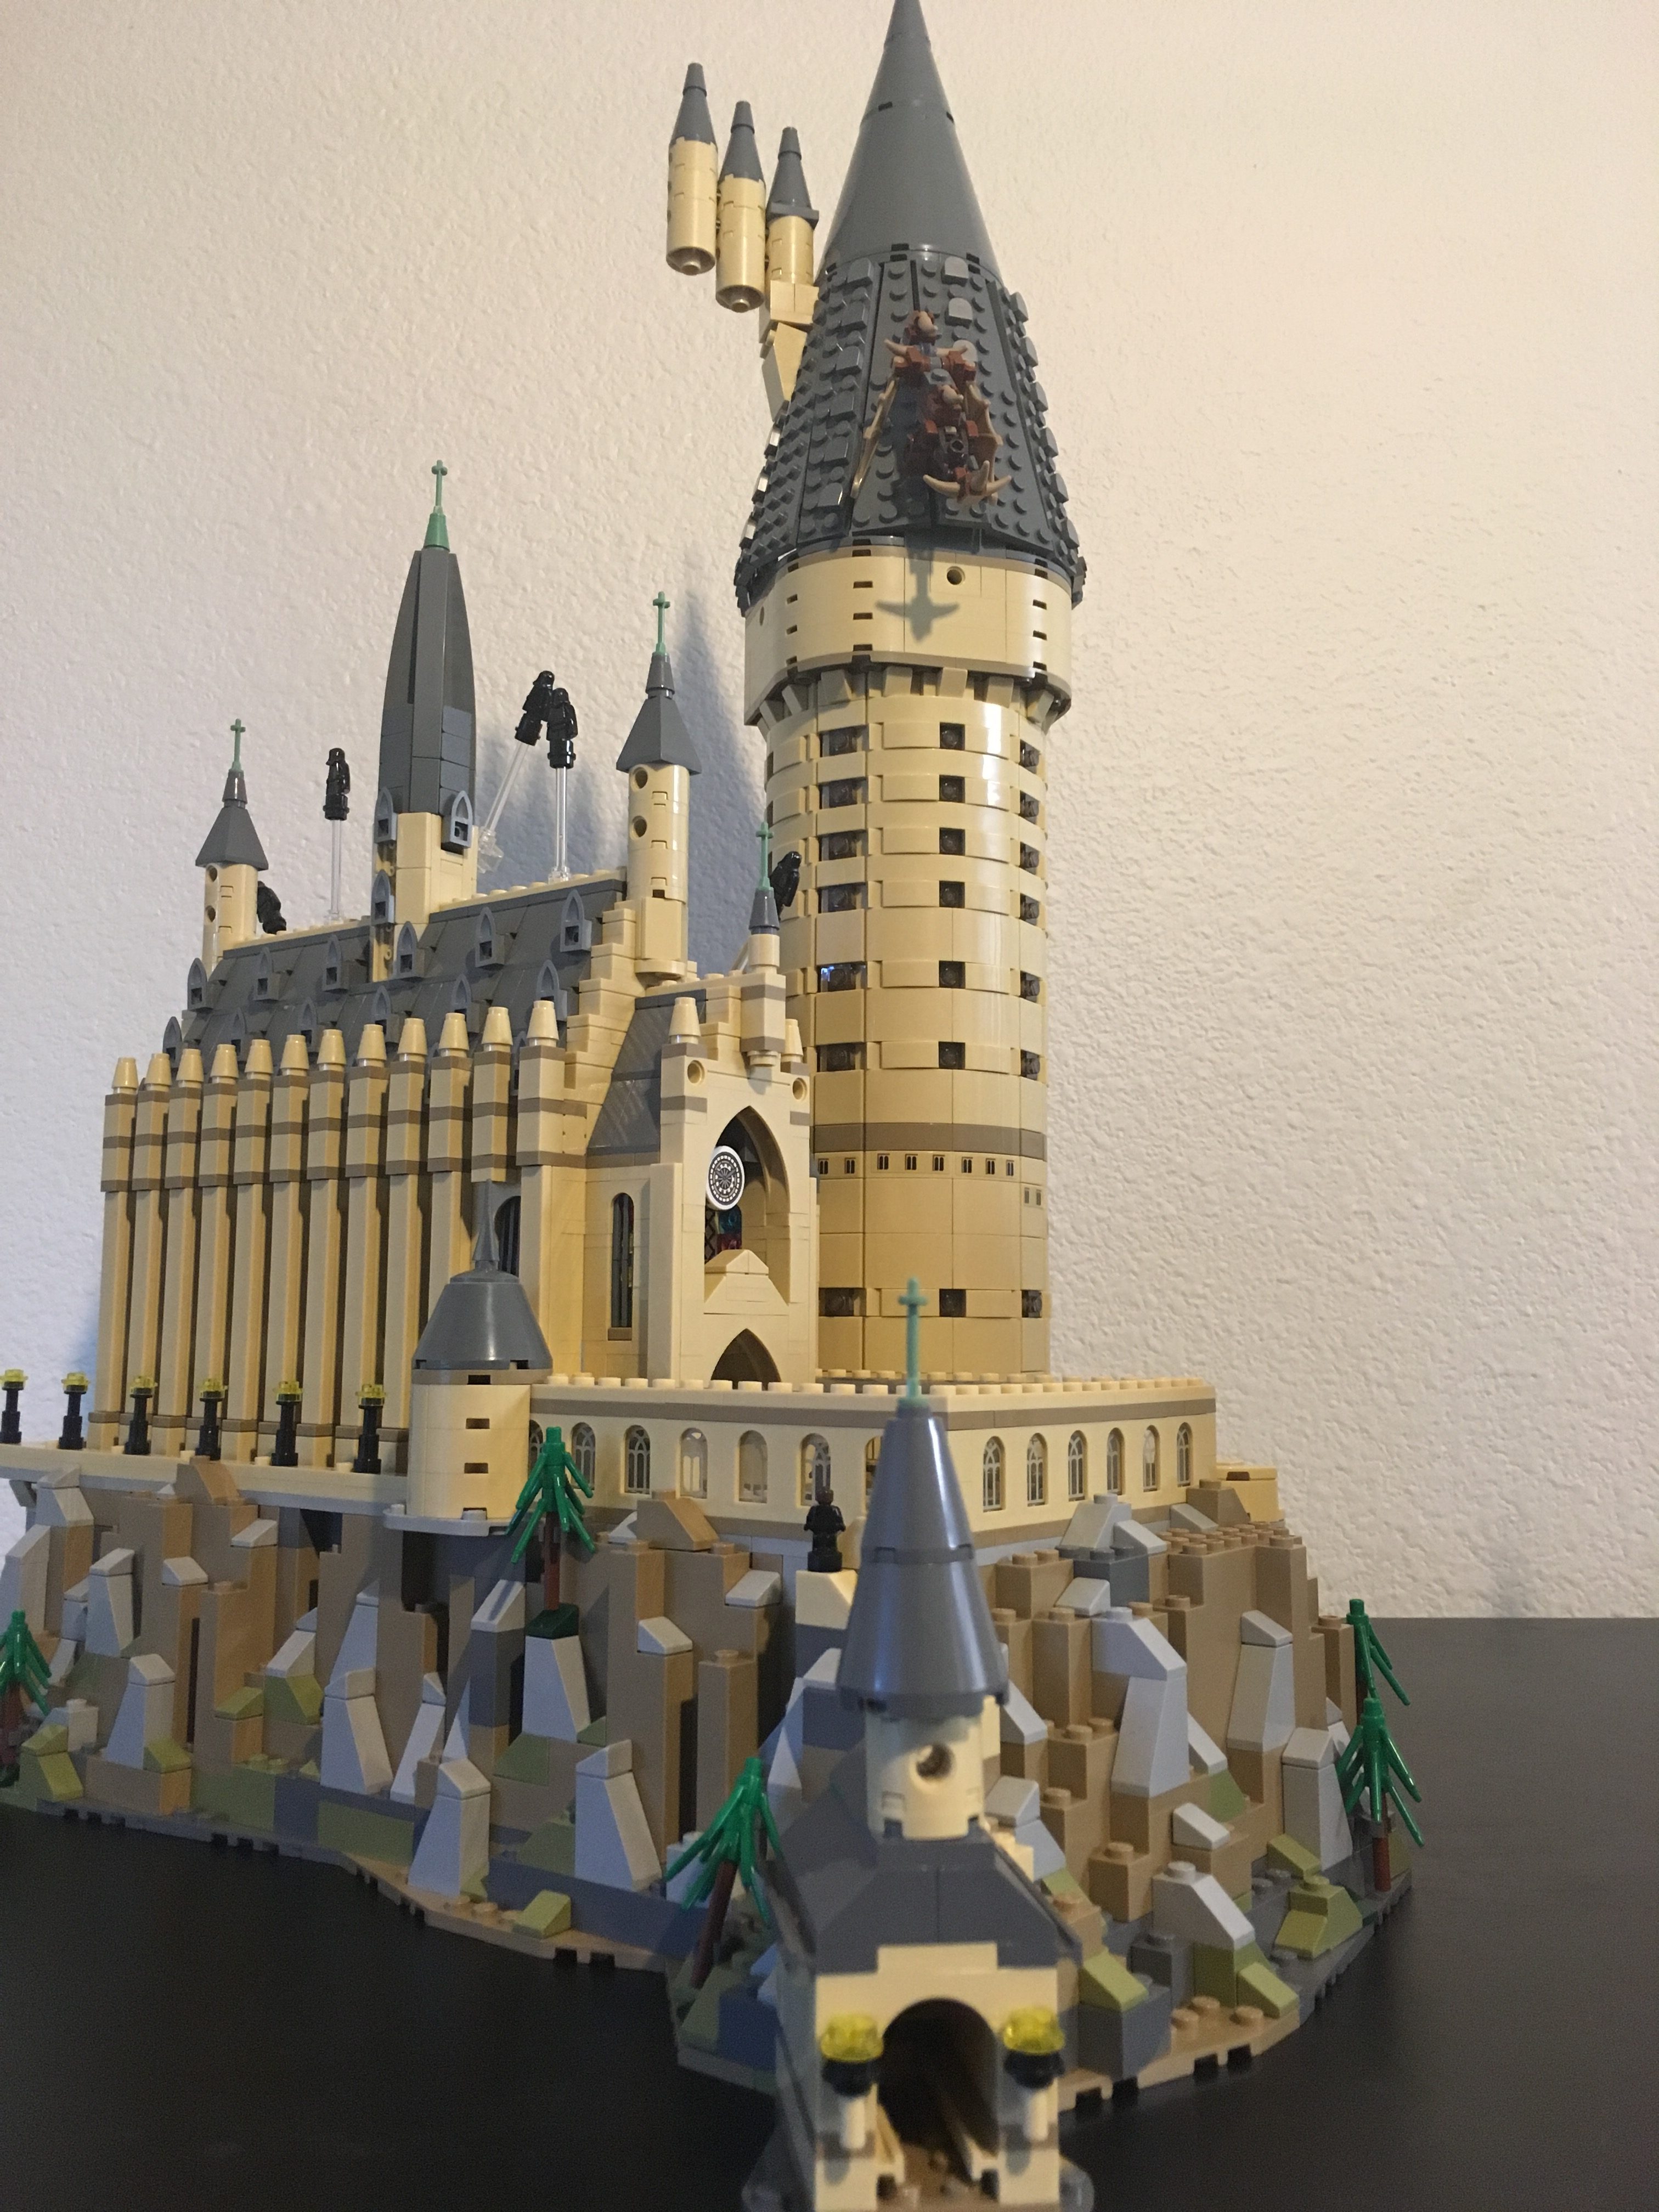 LEGO Harry Potter Hogwarts Castle 2018 full review! 71043 